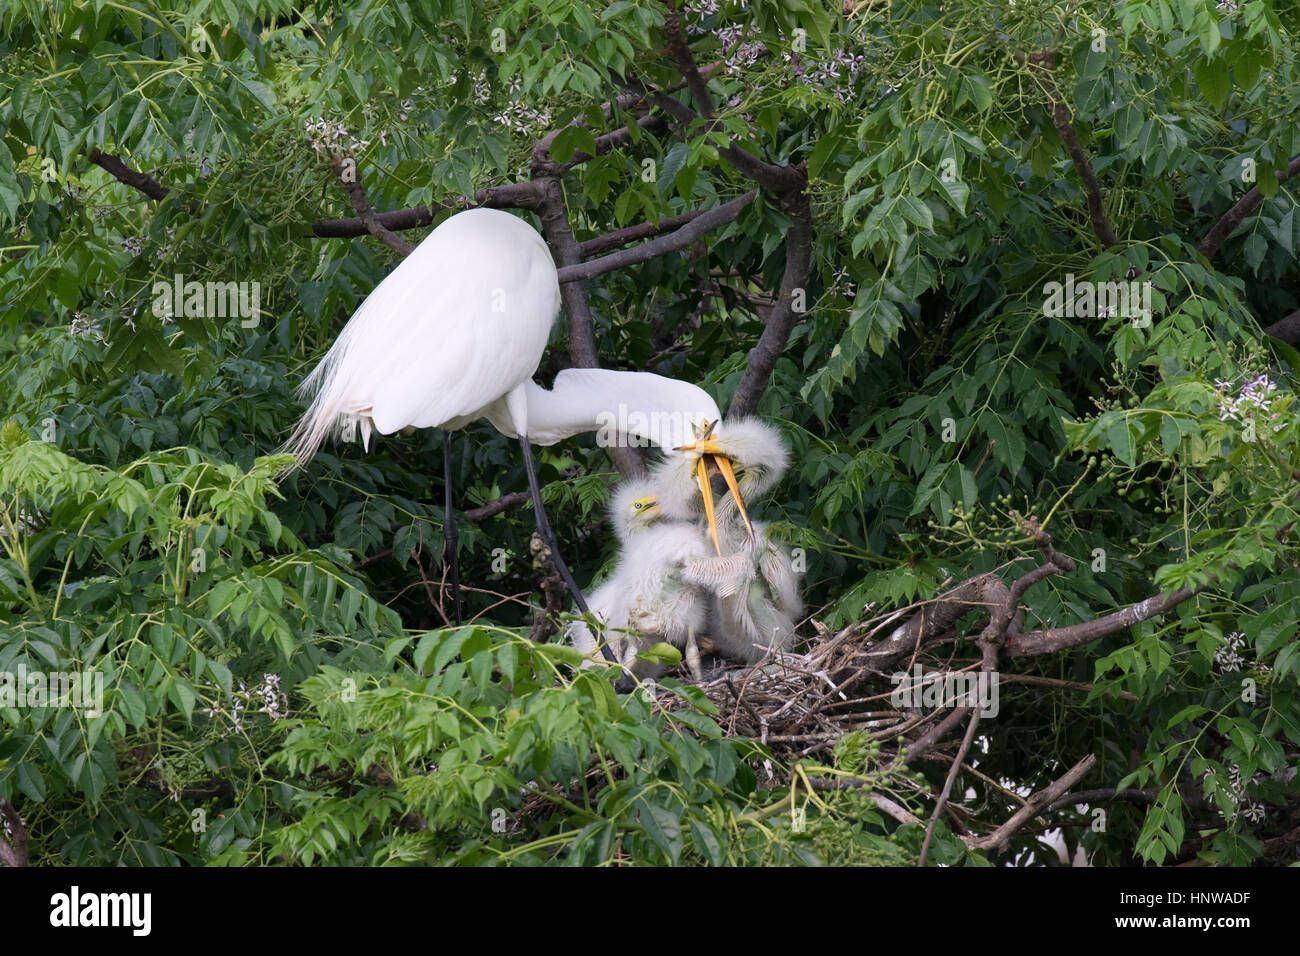 Great Egrets Feeding Nestlings at Smith Oaks Sanctuary, Texas Stock Photo